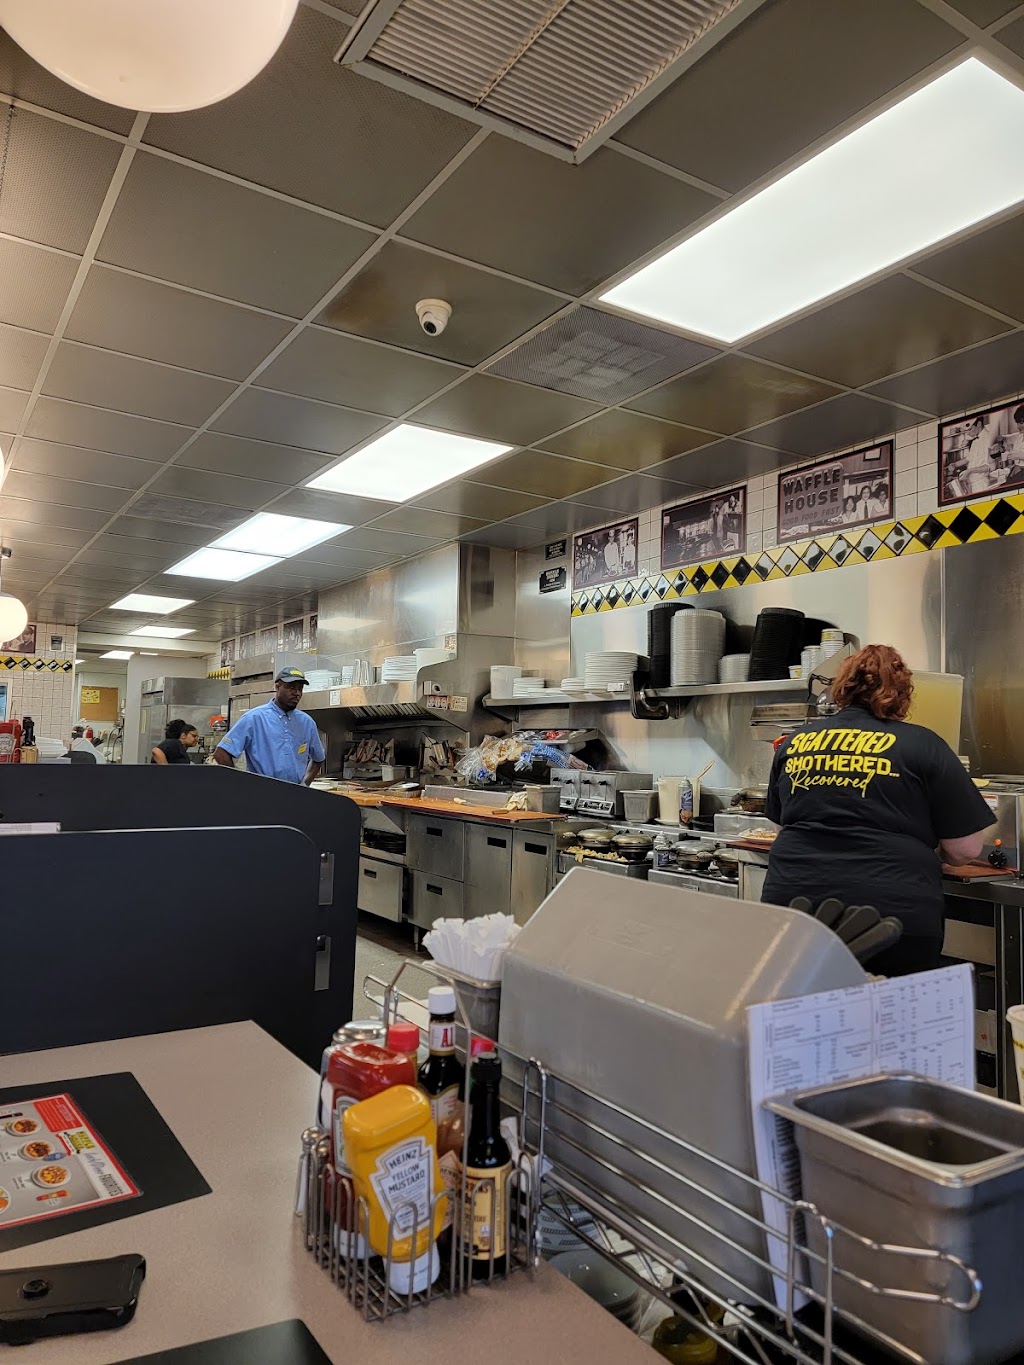 Waffle House | 1107 E Dayton Dr YELLOW, Fairborn, OH 45324 | Phone: (937) 318-2514